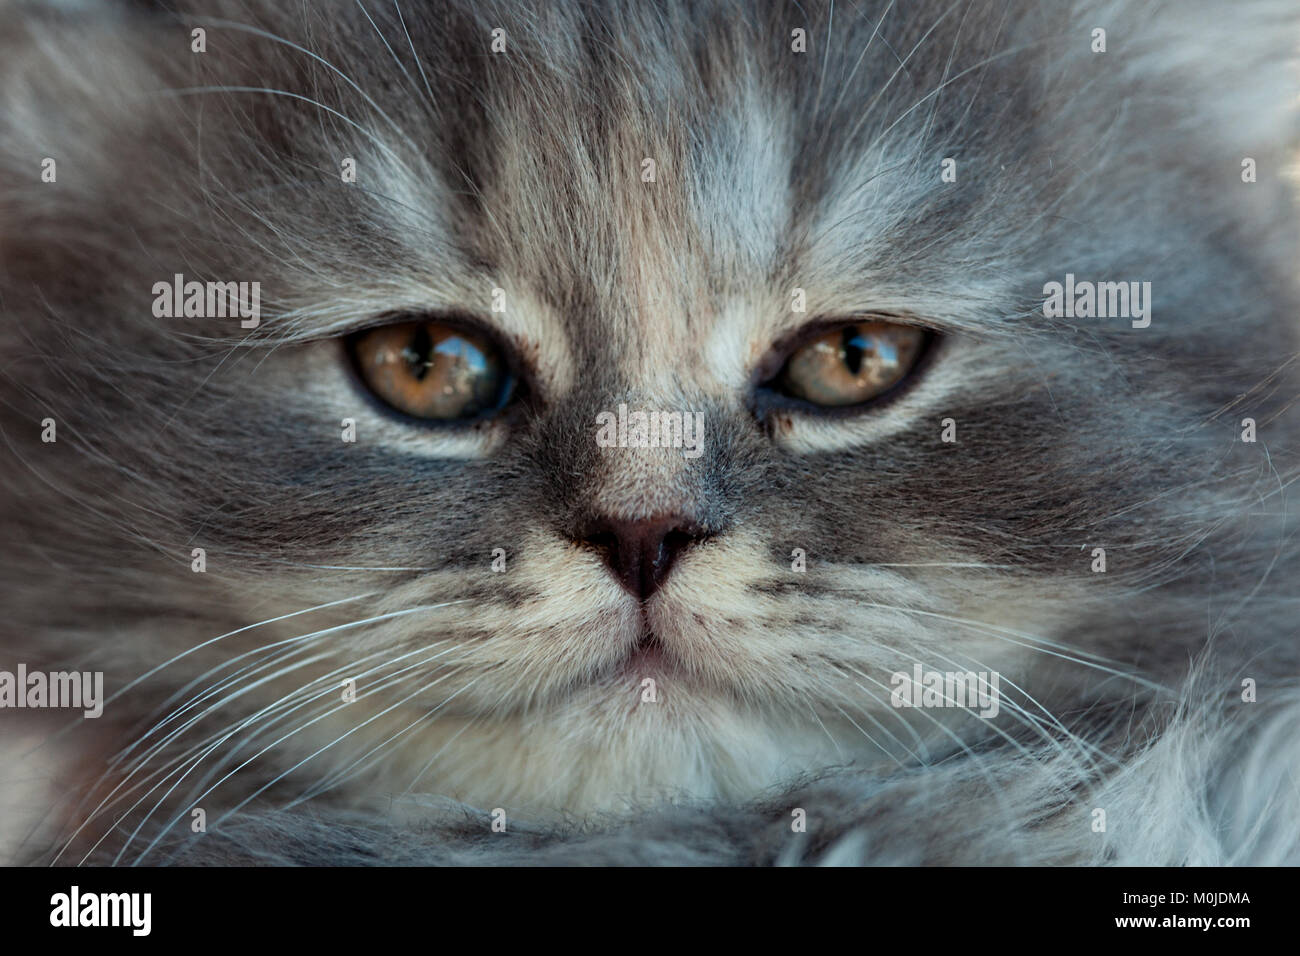 Portrait of a sad gray kitten close up. Stock Photo